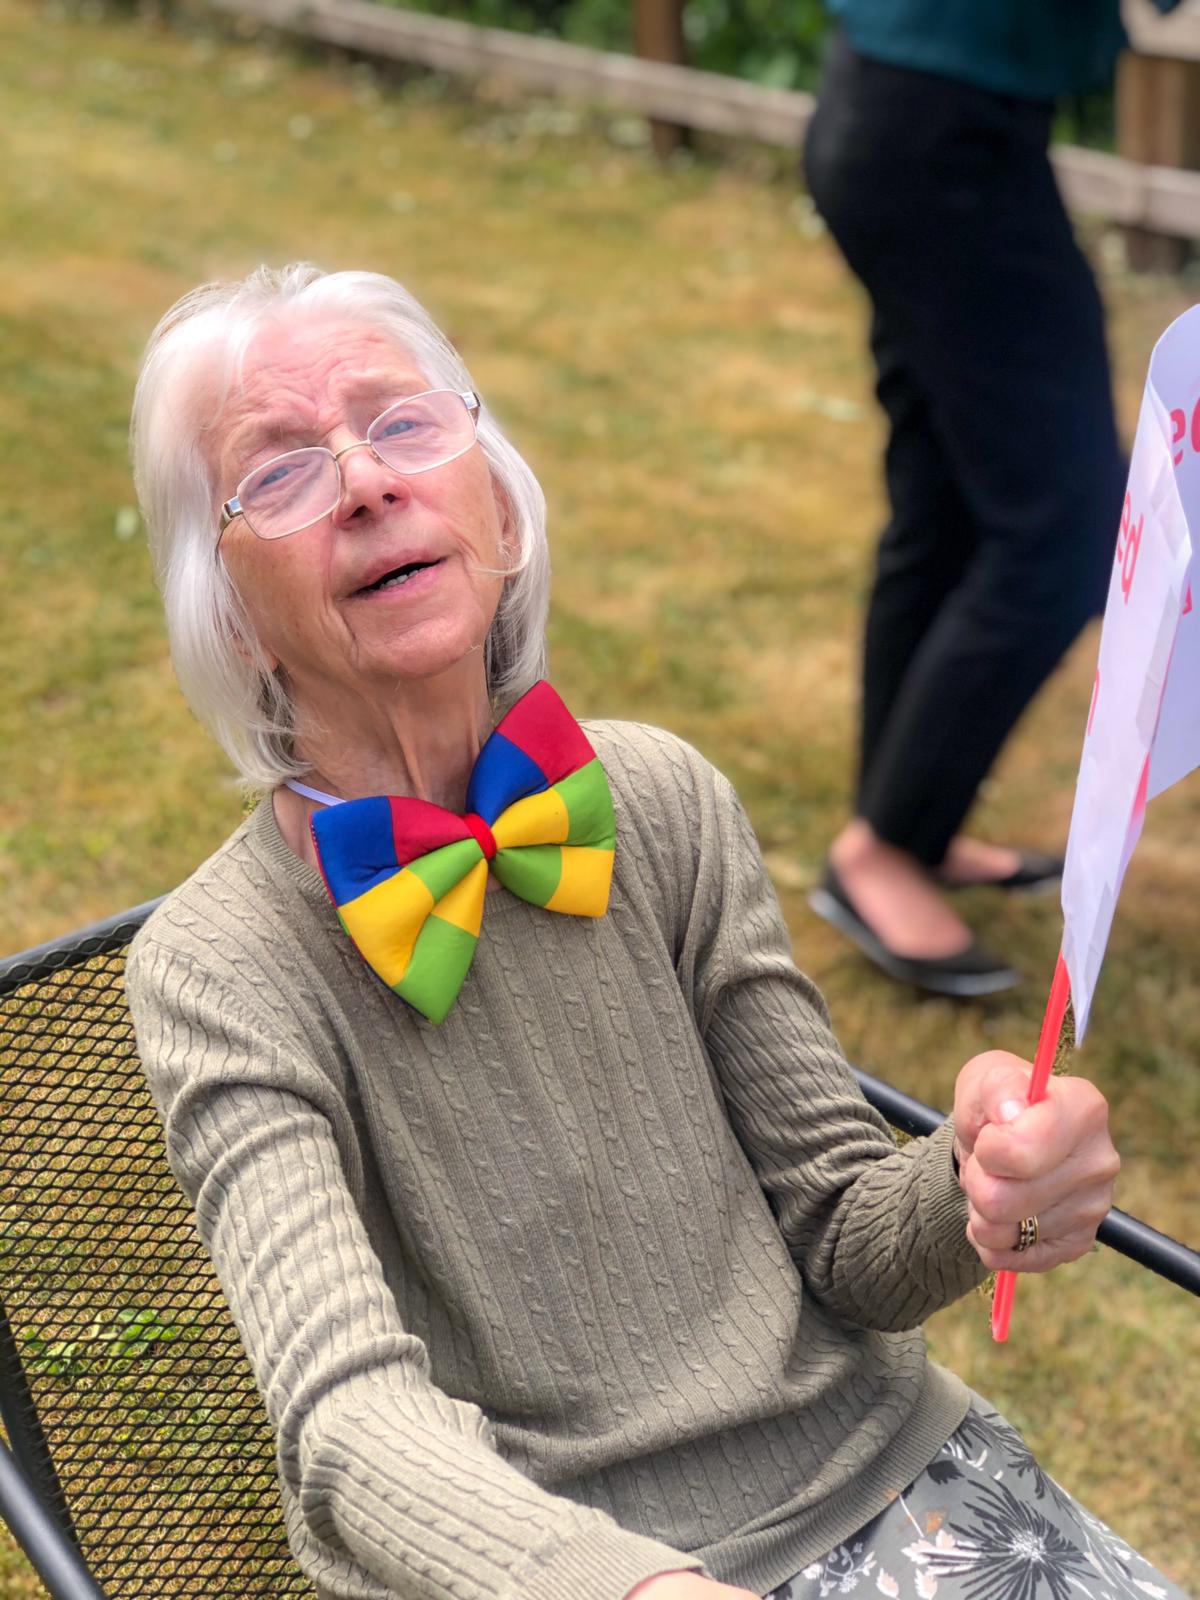 Sally enjoying sports day in a clown bow tie 